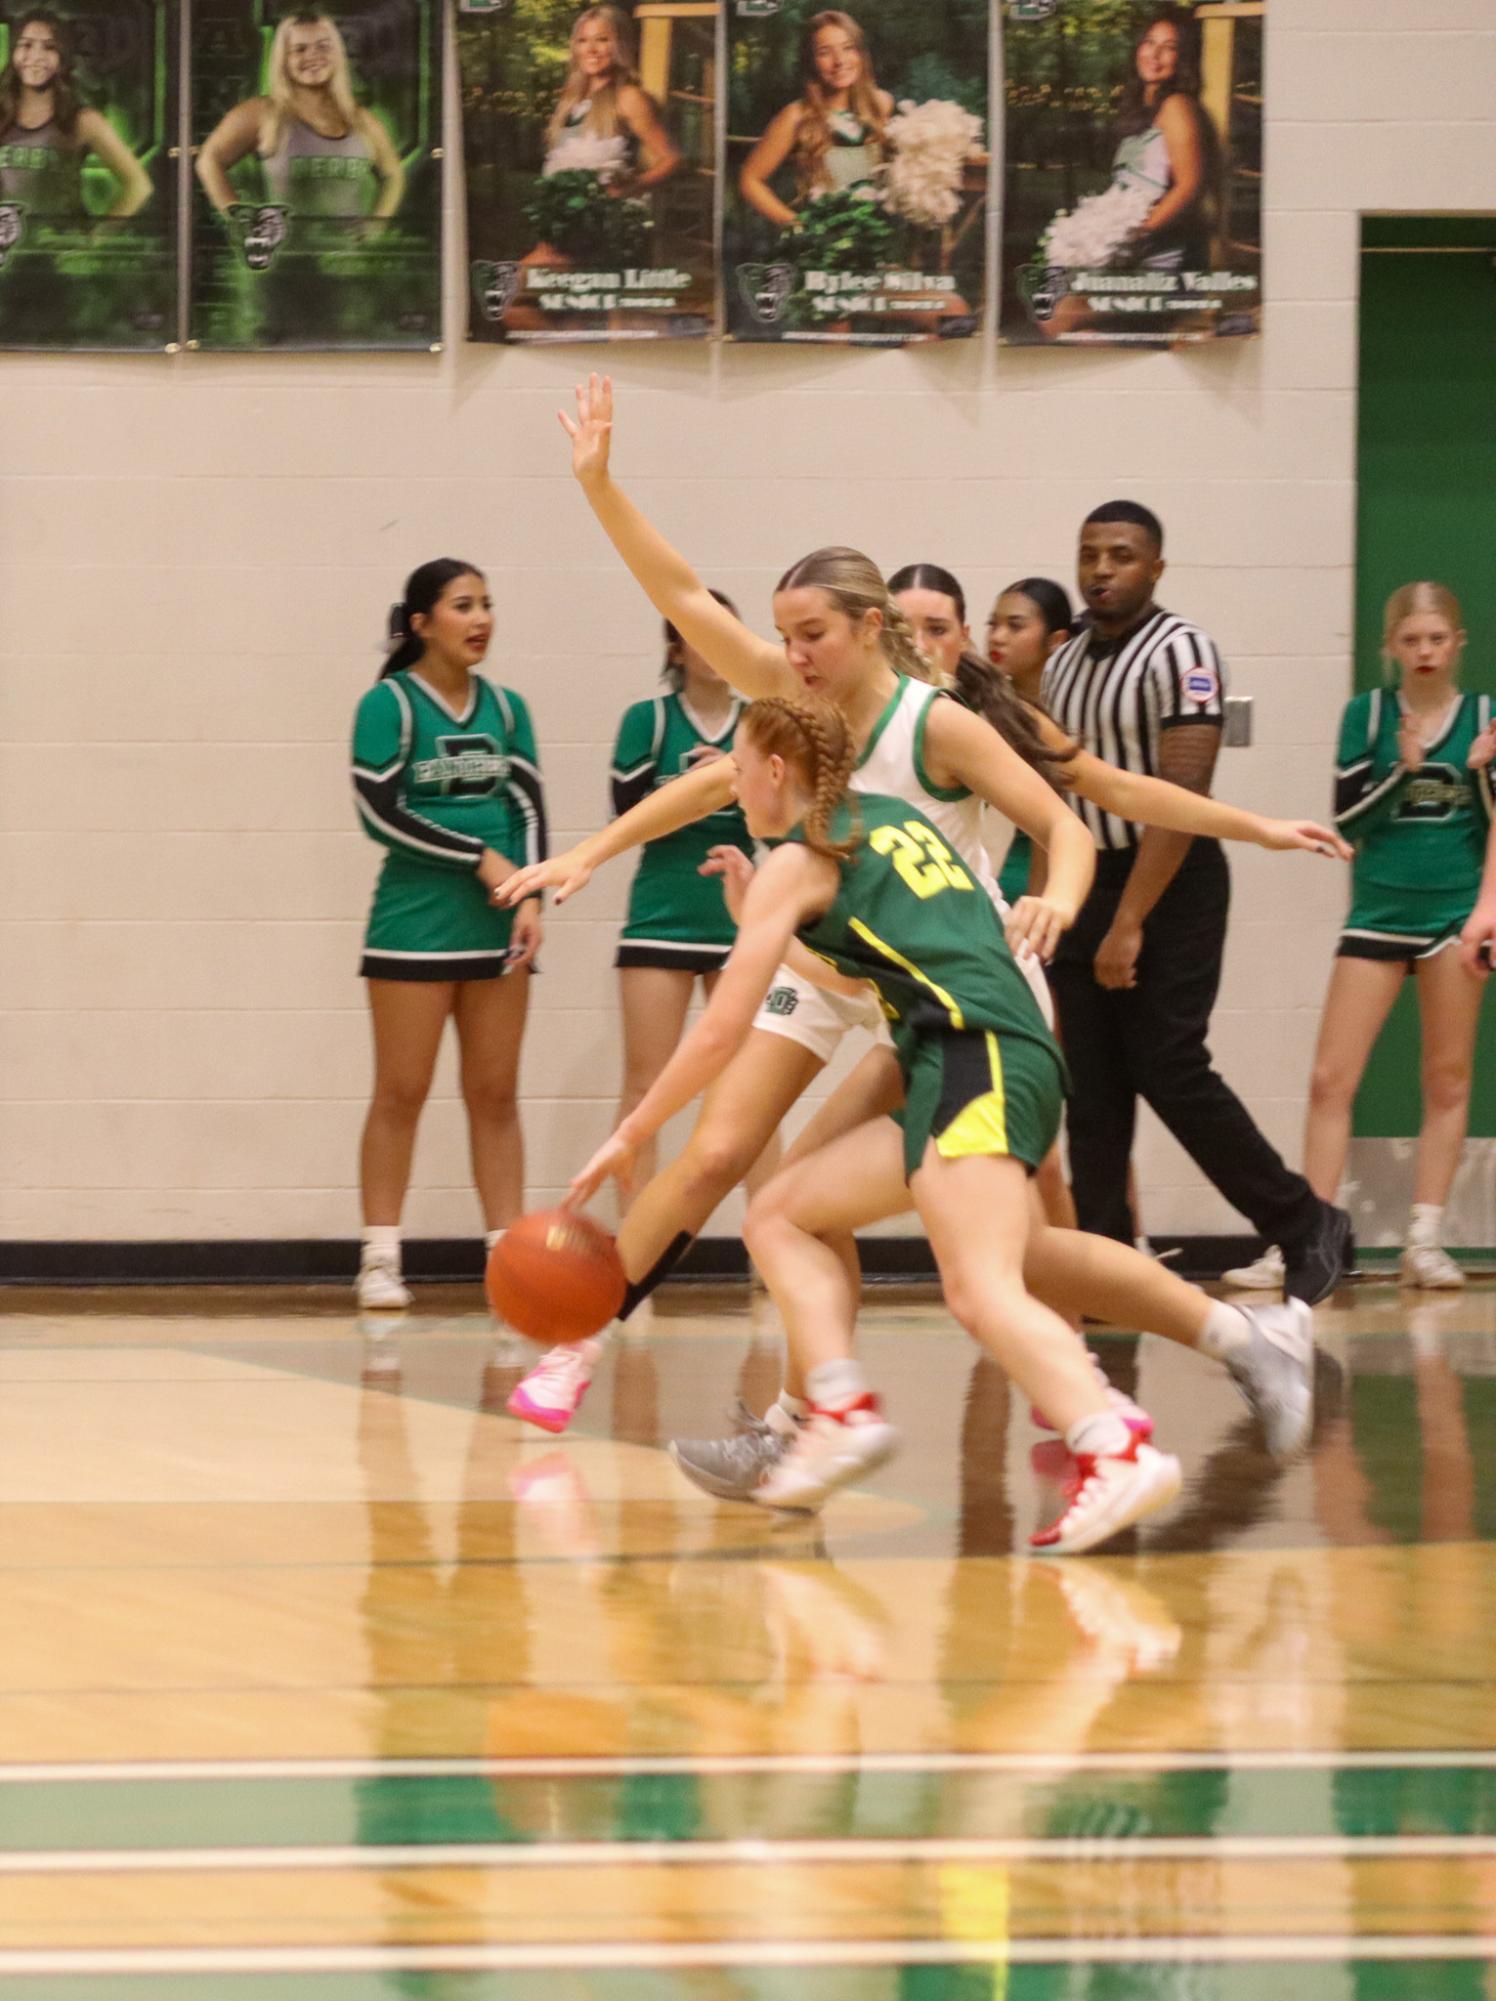 Girls+varsity+basketball+vs.+South+%28Photos+by+Delainey+Stephenson%29